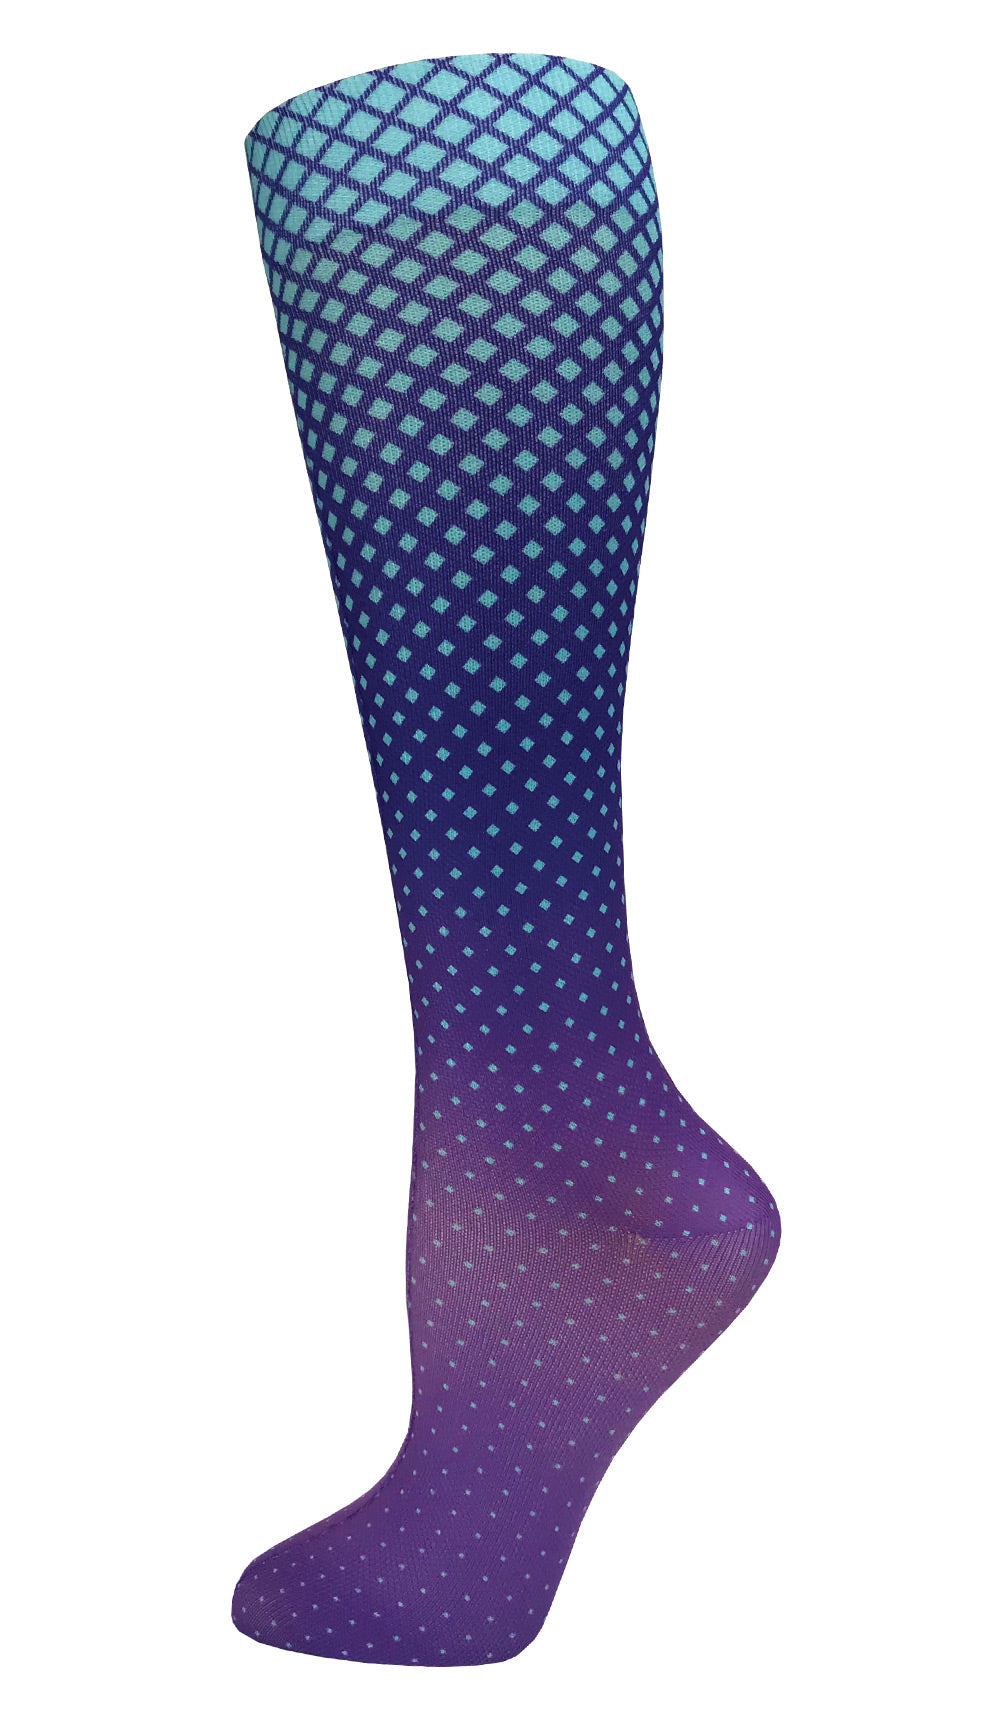 12" Soft Comfort Compression Socks by Prestige /  Dot Matrix Aqua & Purple